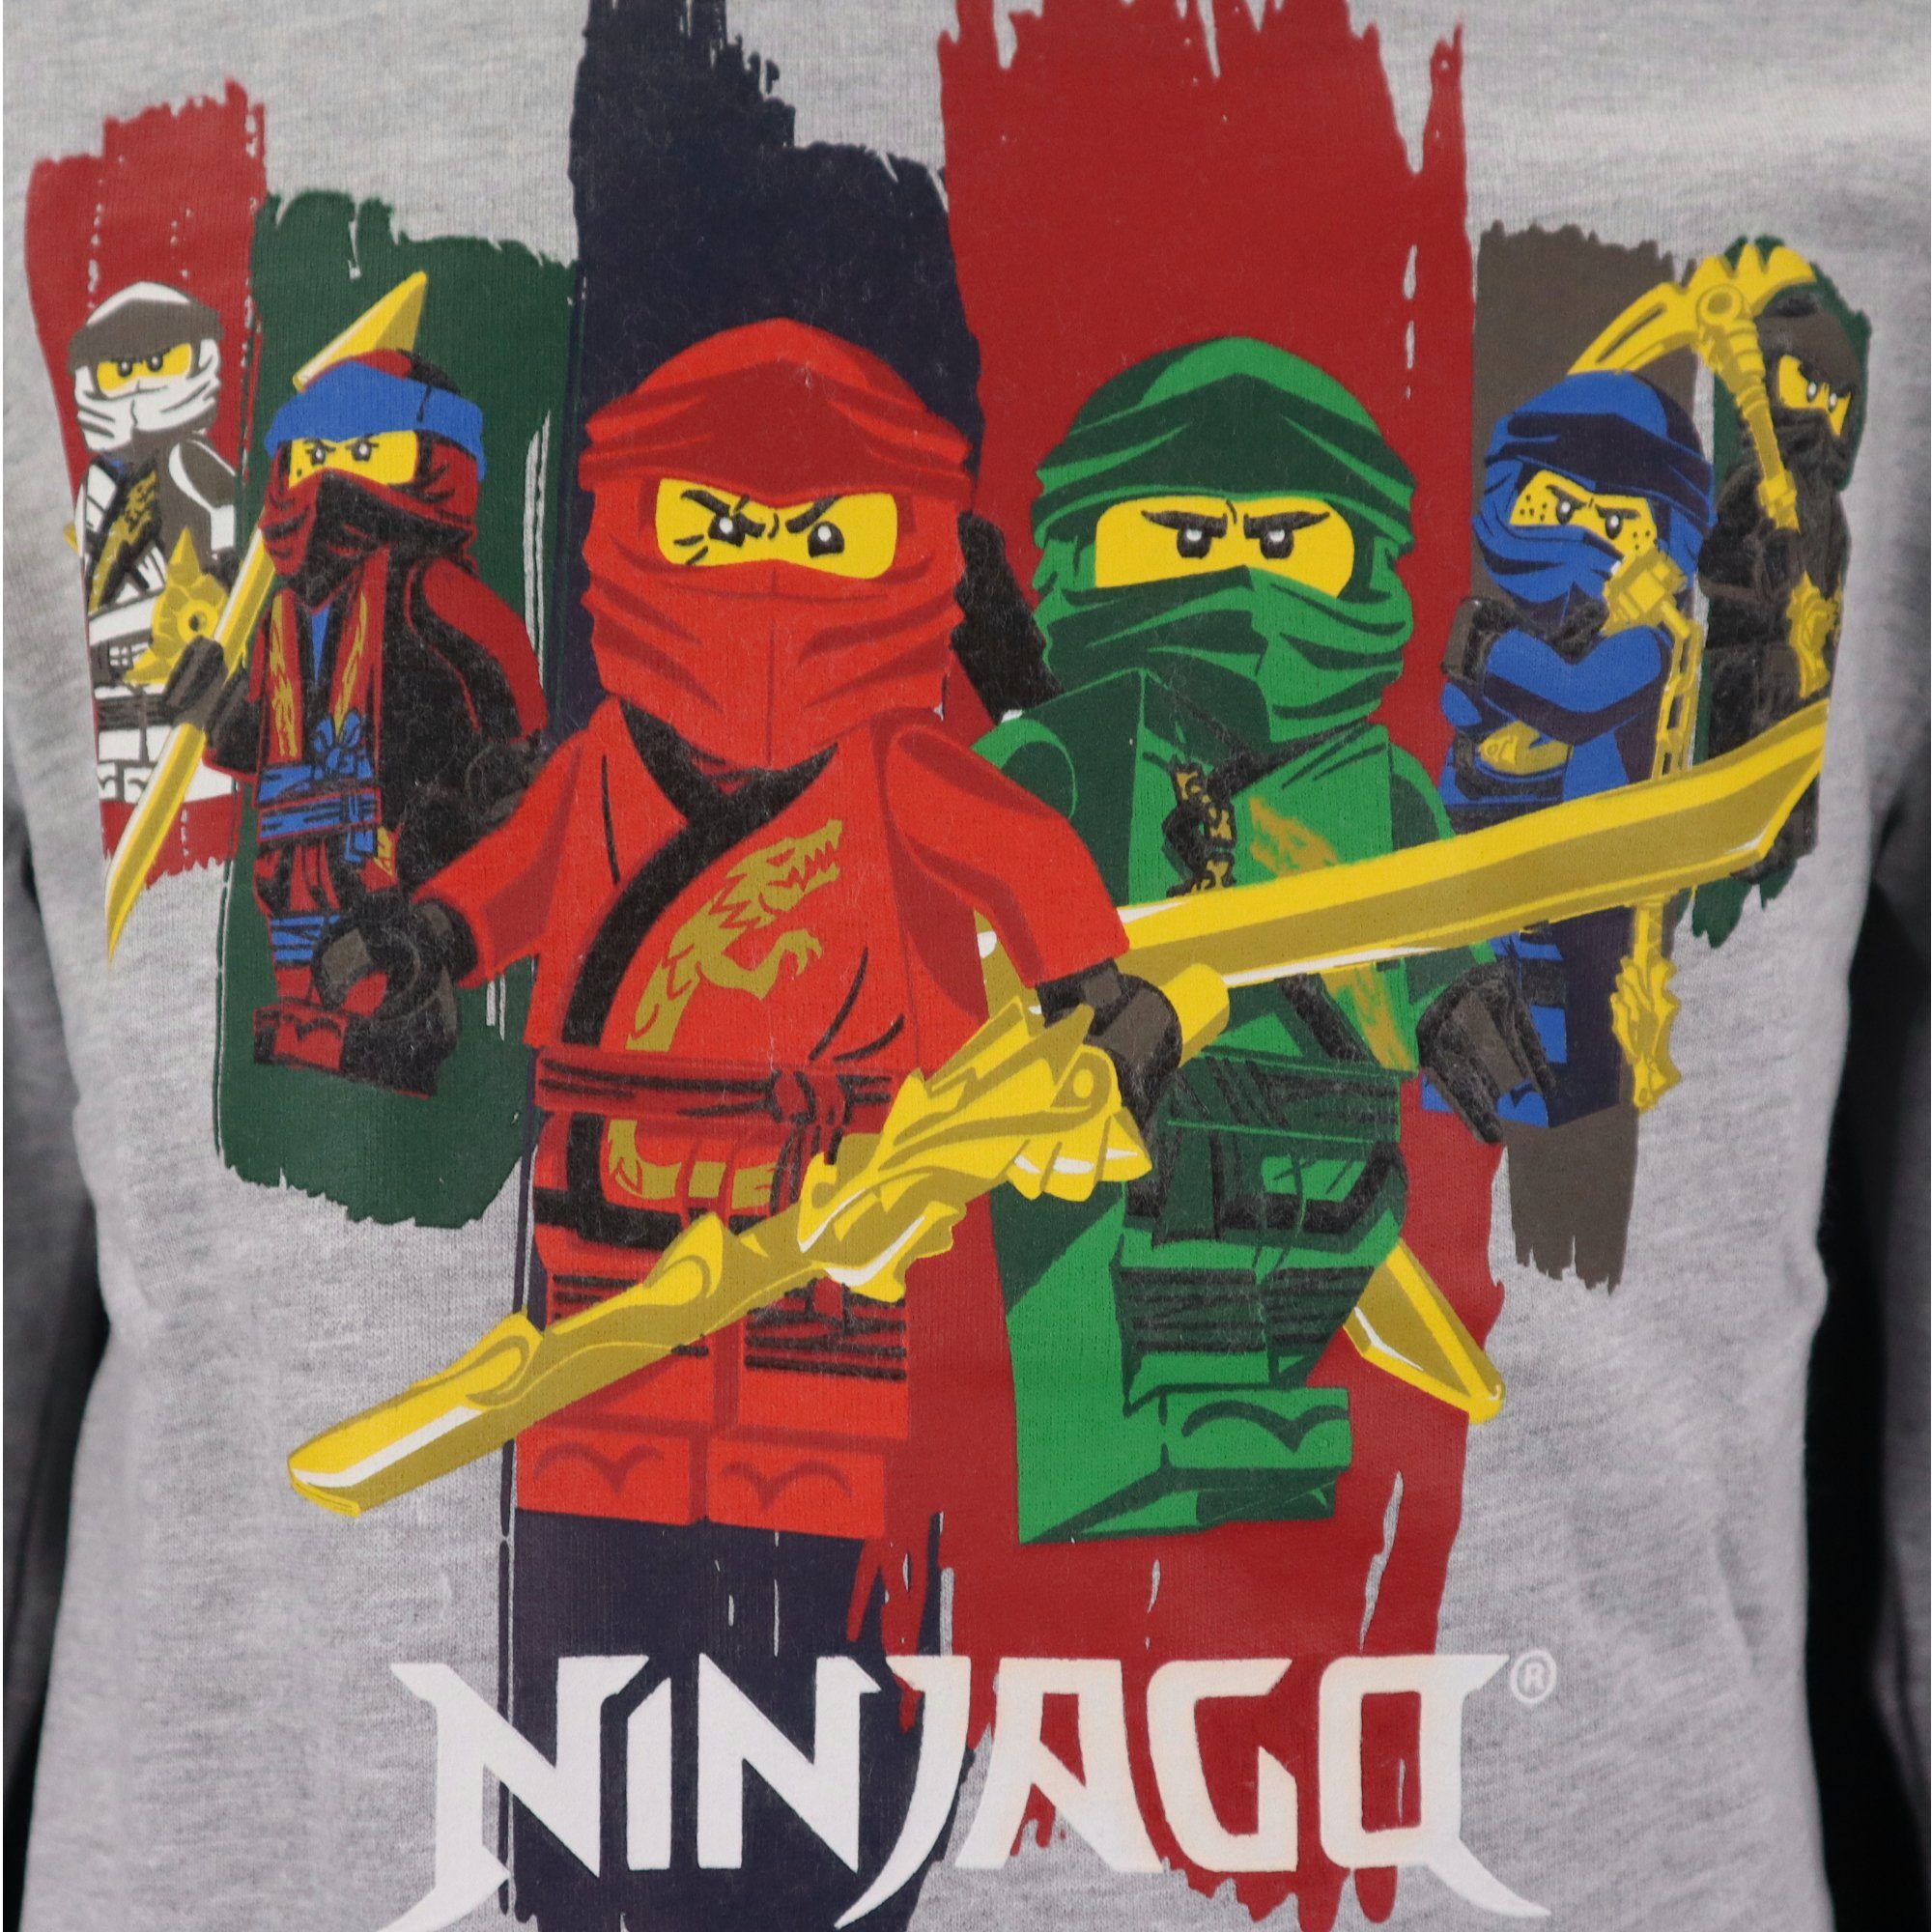 Ninjago Grau Kinder Schwarz LEGO® 128, 98 Gr. bis Pullover Sweater Jungen